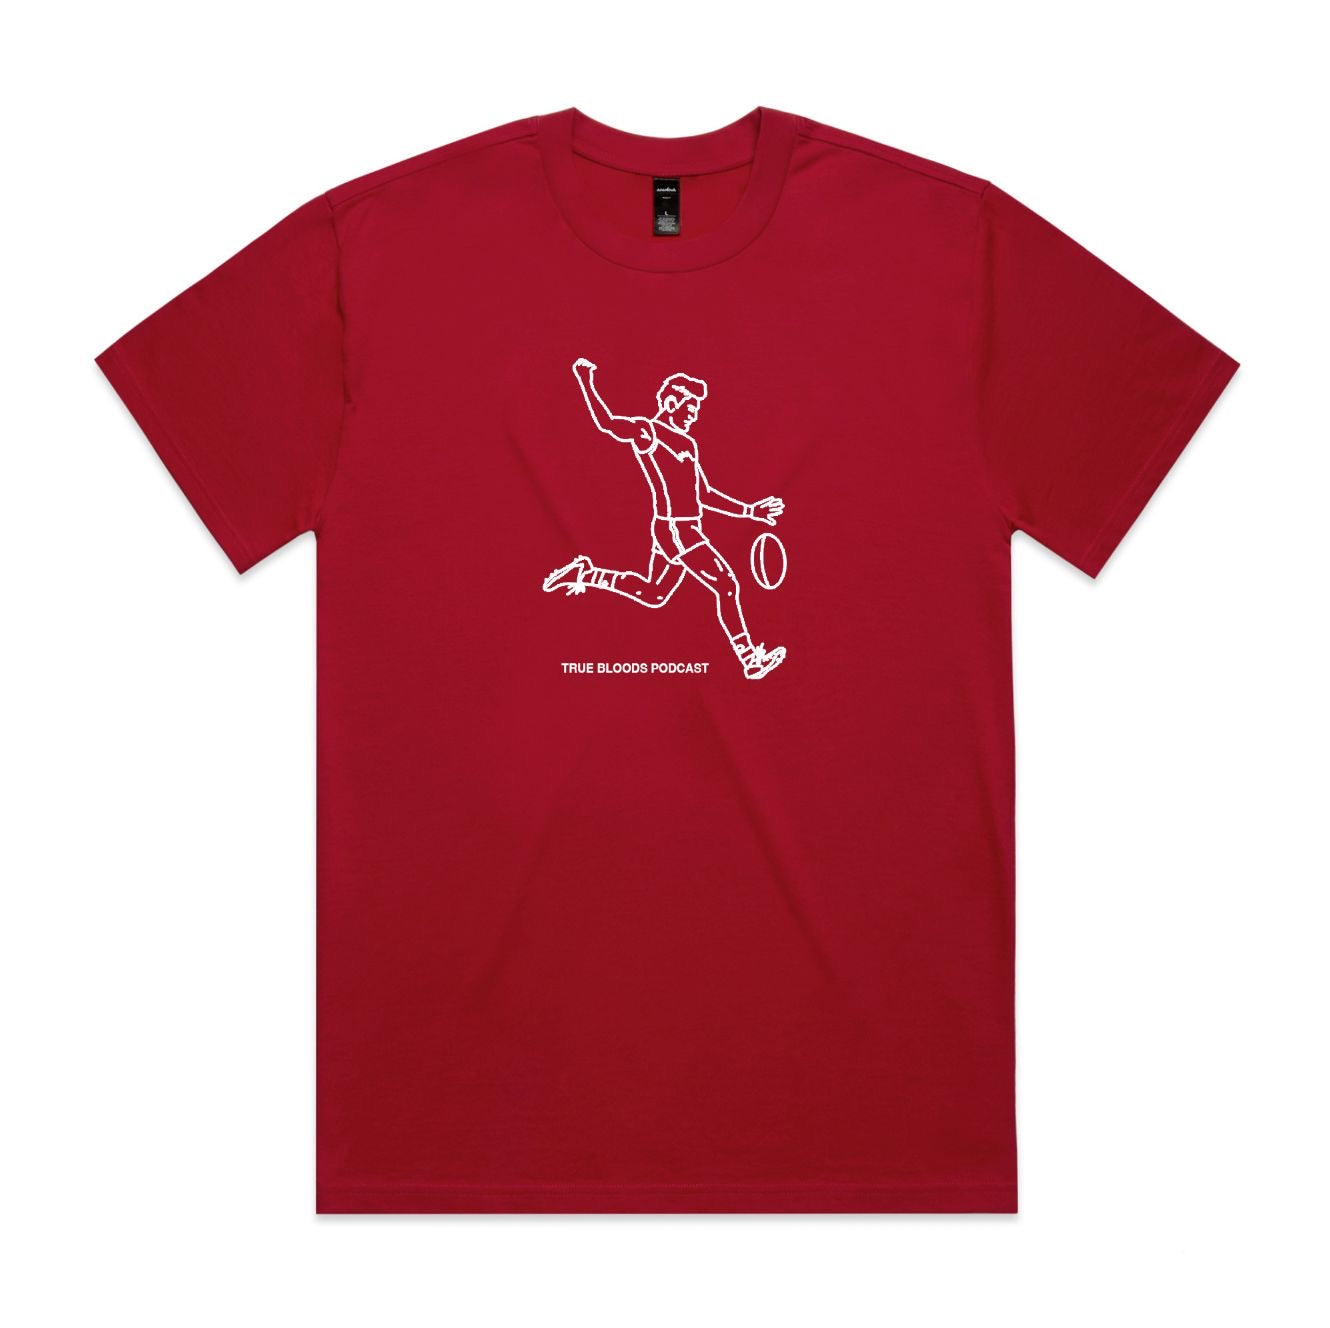 Errol red outline T-Shirt